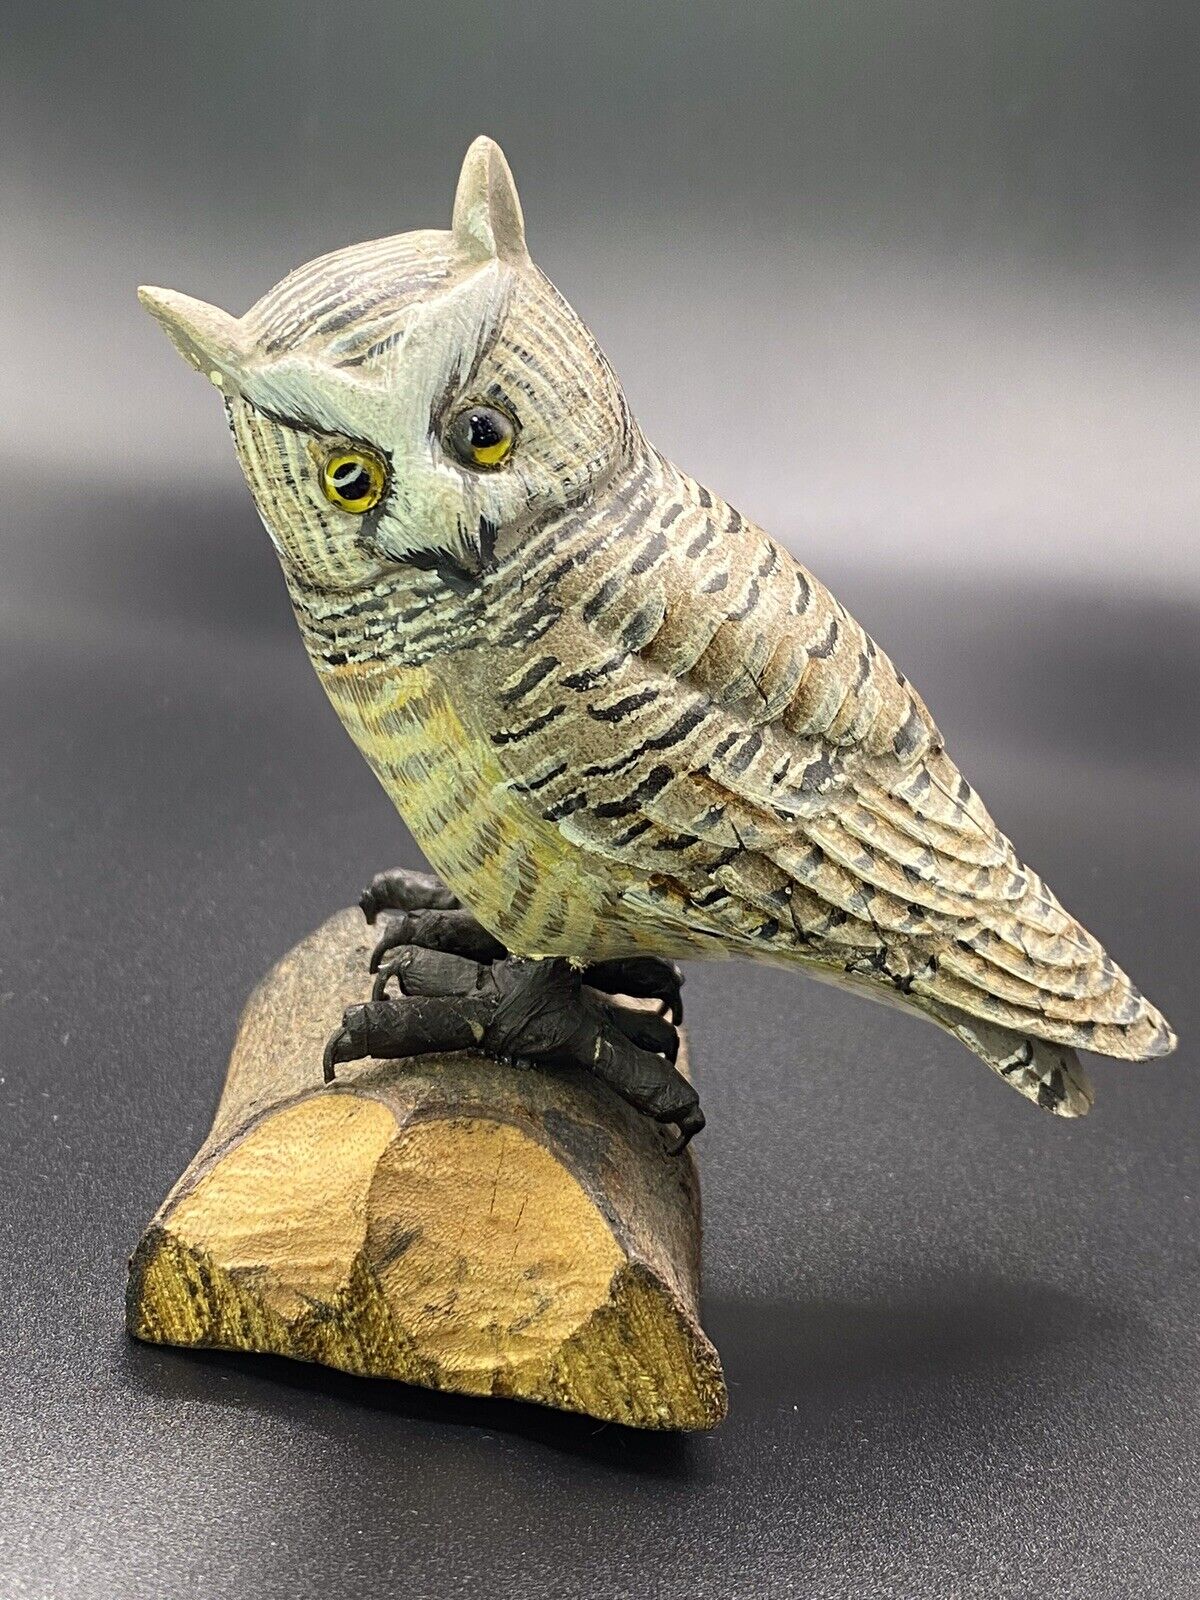 Whet Colorful Wooden Handmade Decorative Owl Bird Figurine